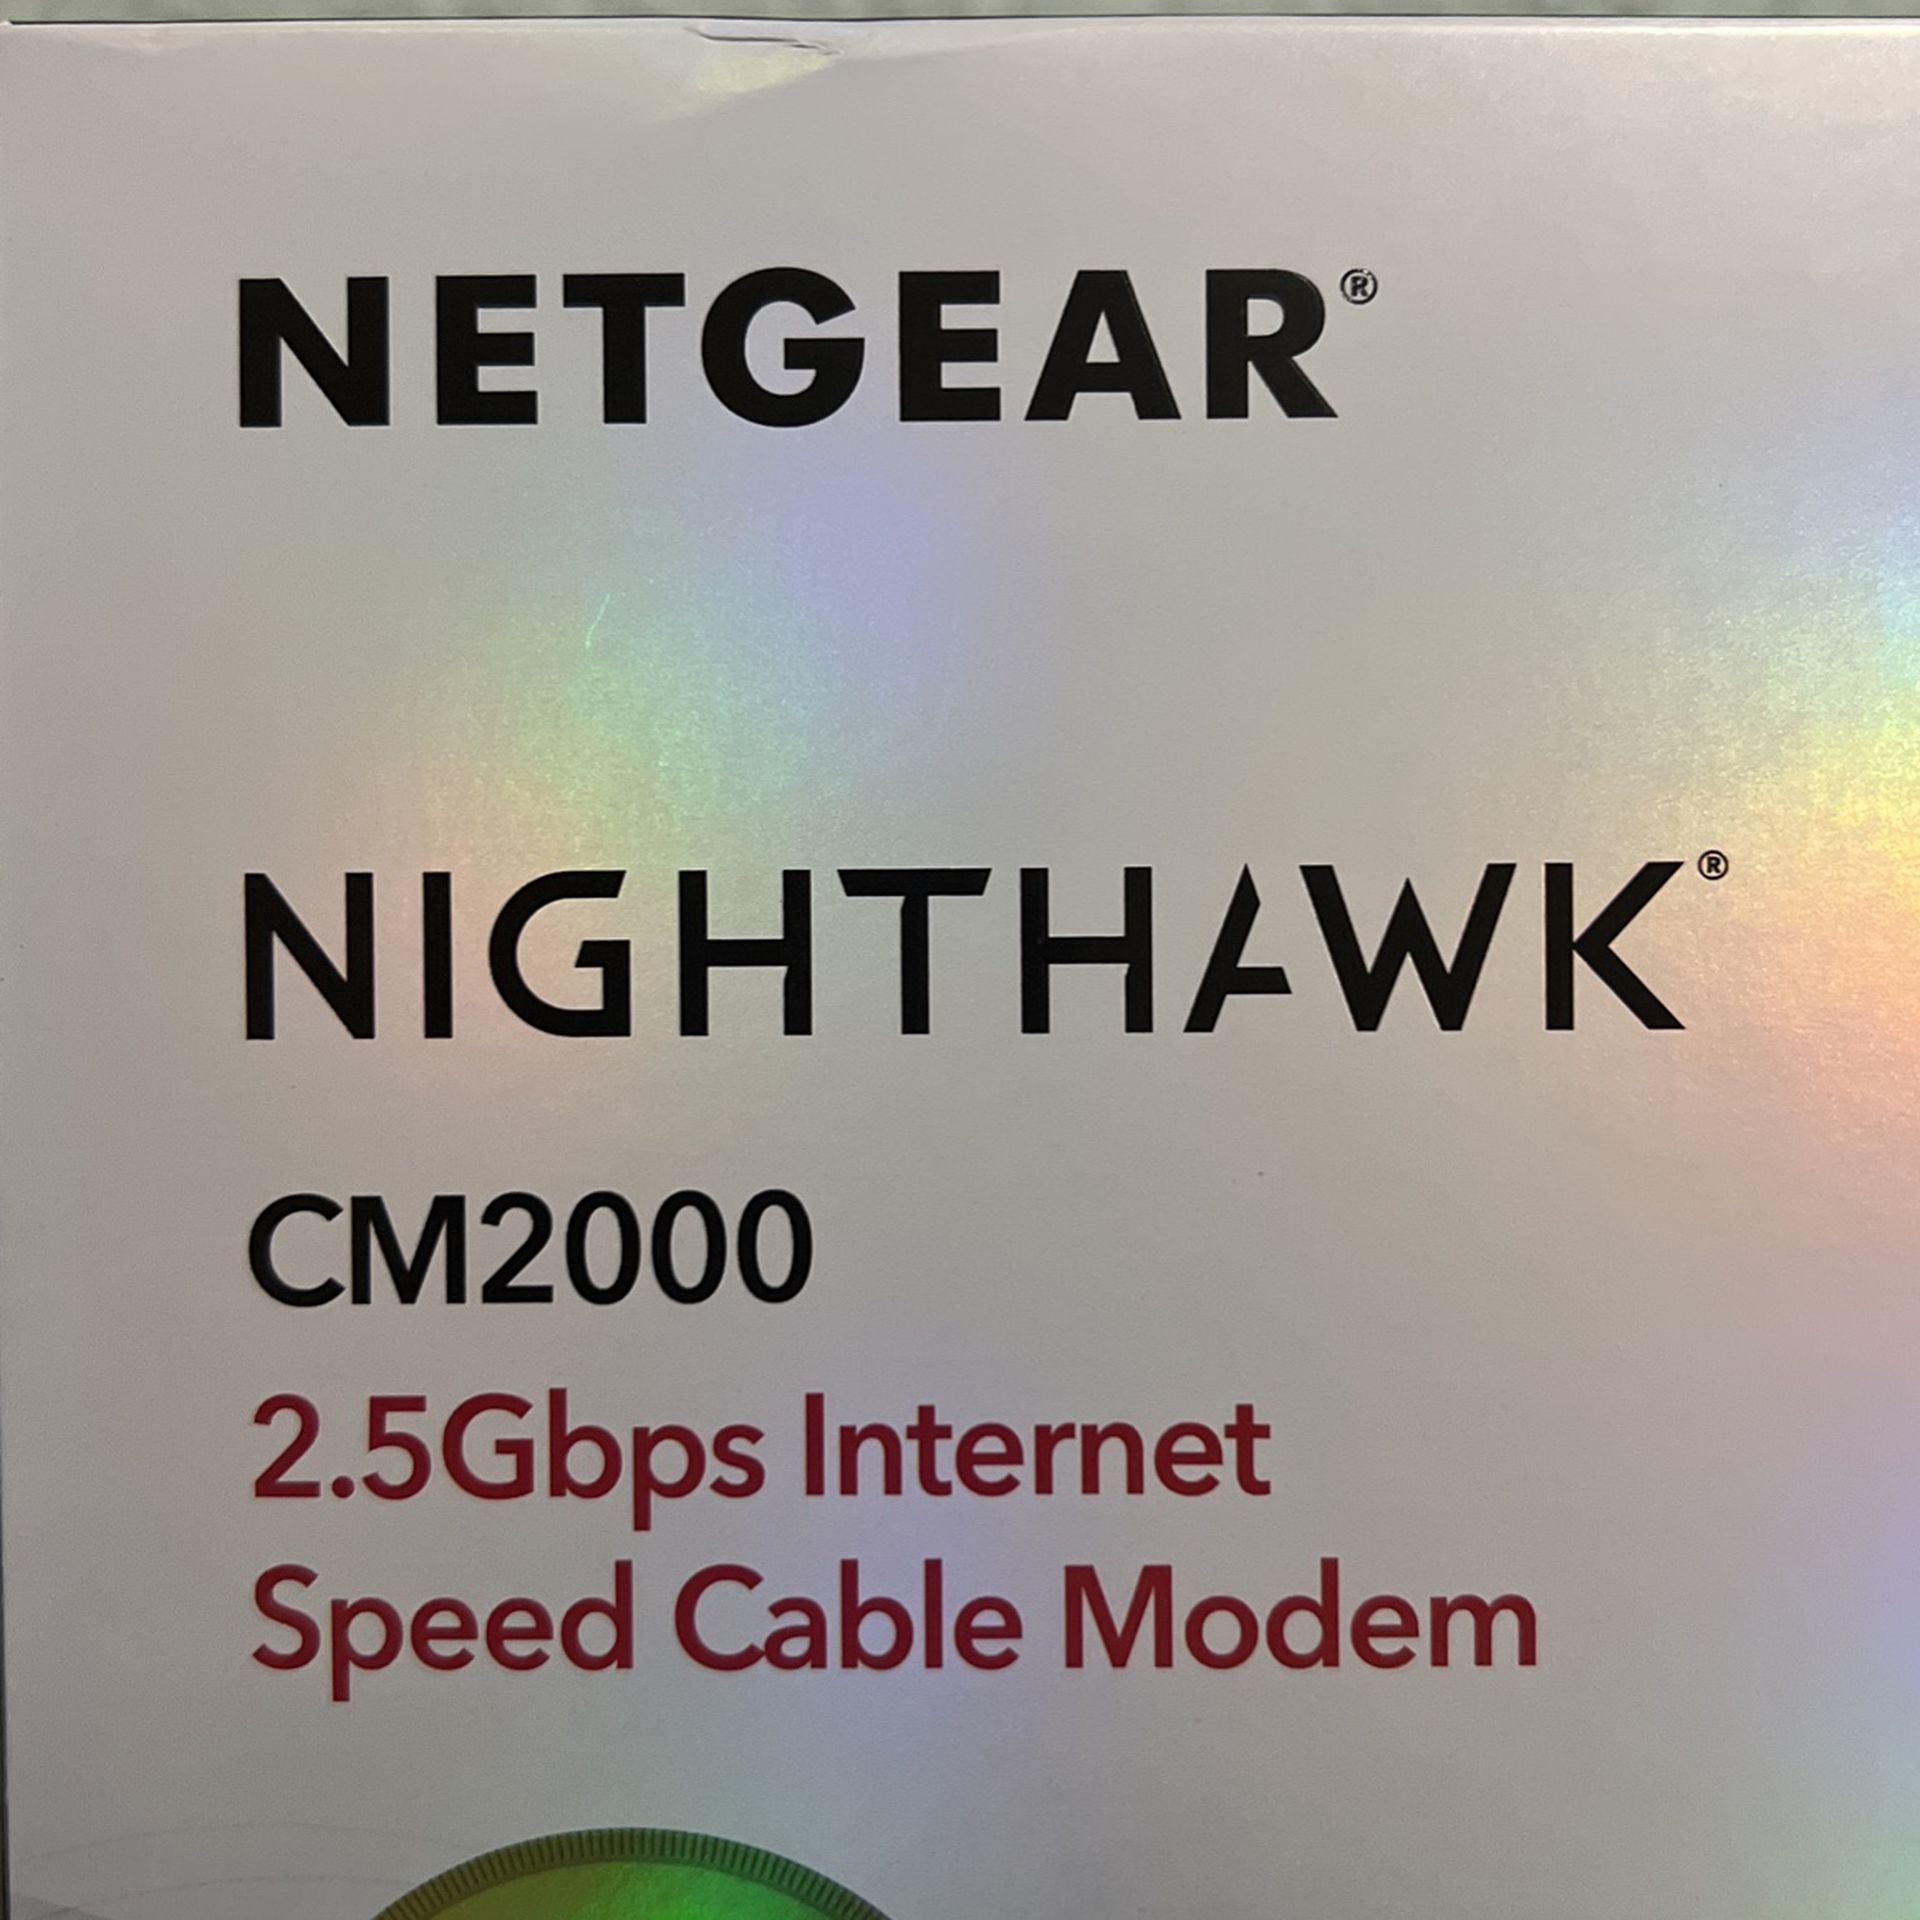 NETGEAR NIGHTHAWK CM2000 CABLE MODEM